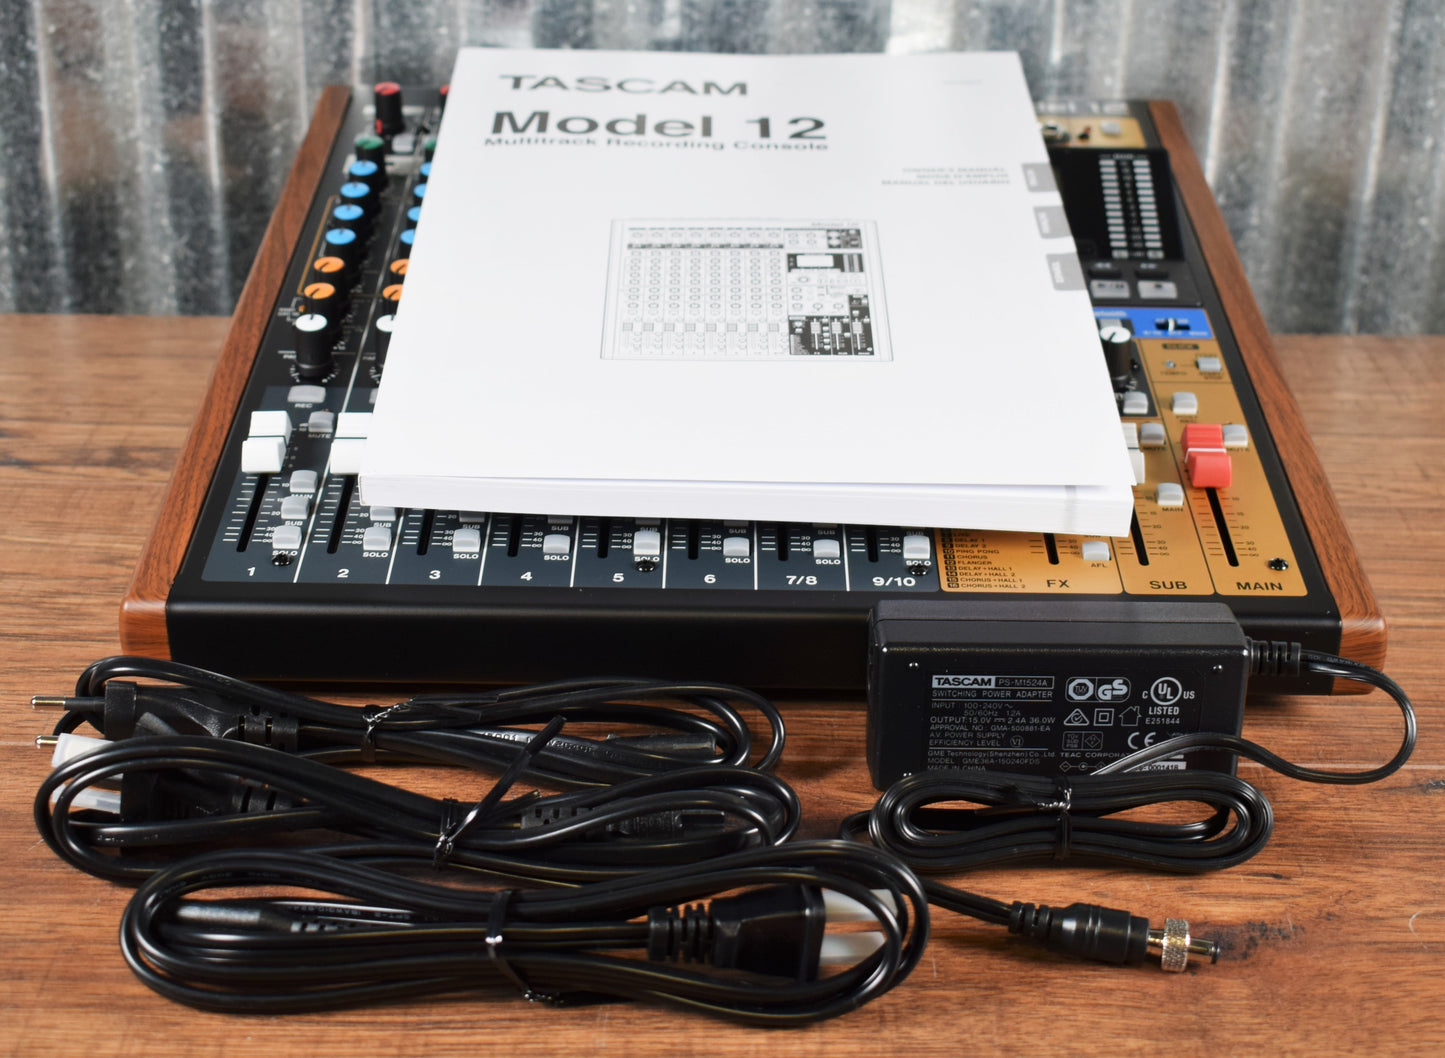 Tascam Model 12 Mixer USB Audio Interface Recorder Controller B Stock